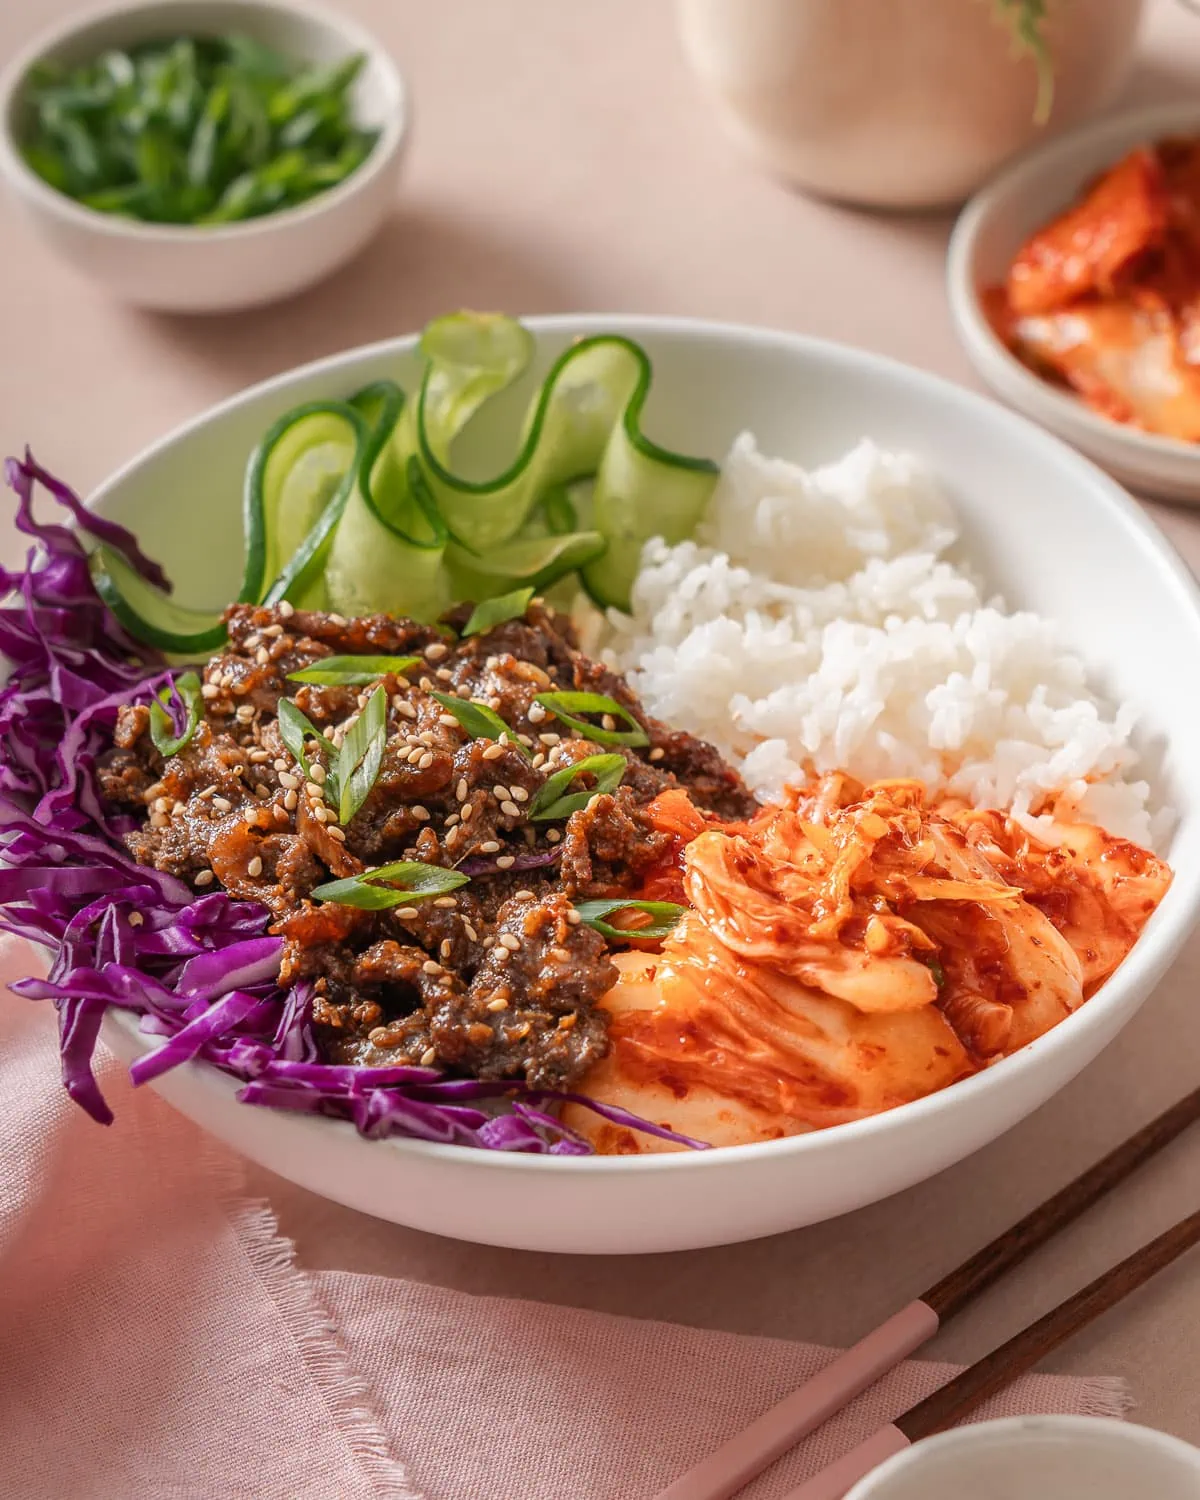 A bulgogi bowl on a table featuring beef bulgogi, kimchi, vegetables, and rice.